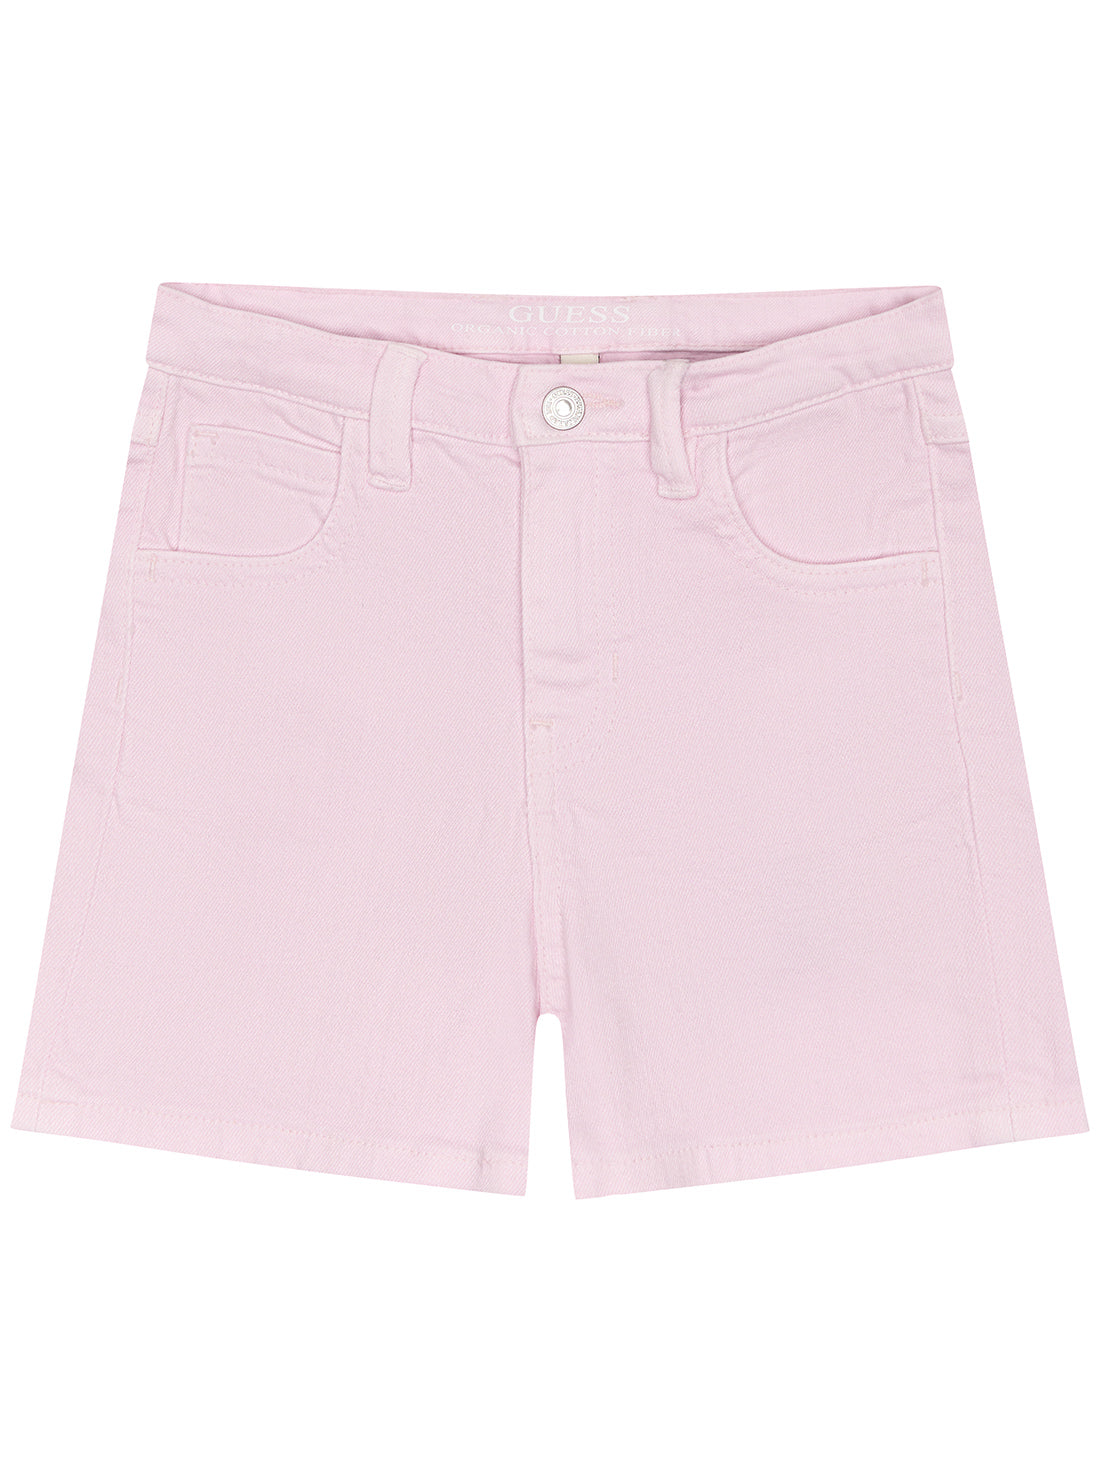 Pink Bull Denim Shorts (2-7) | GUESS Kids | front view